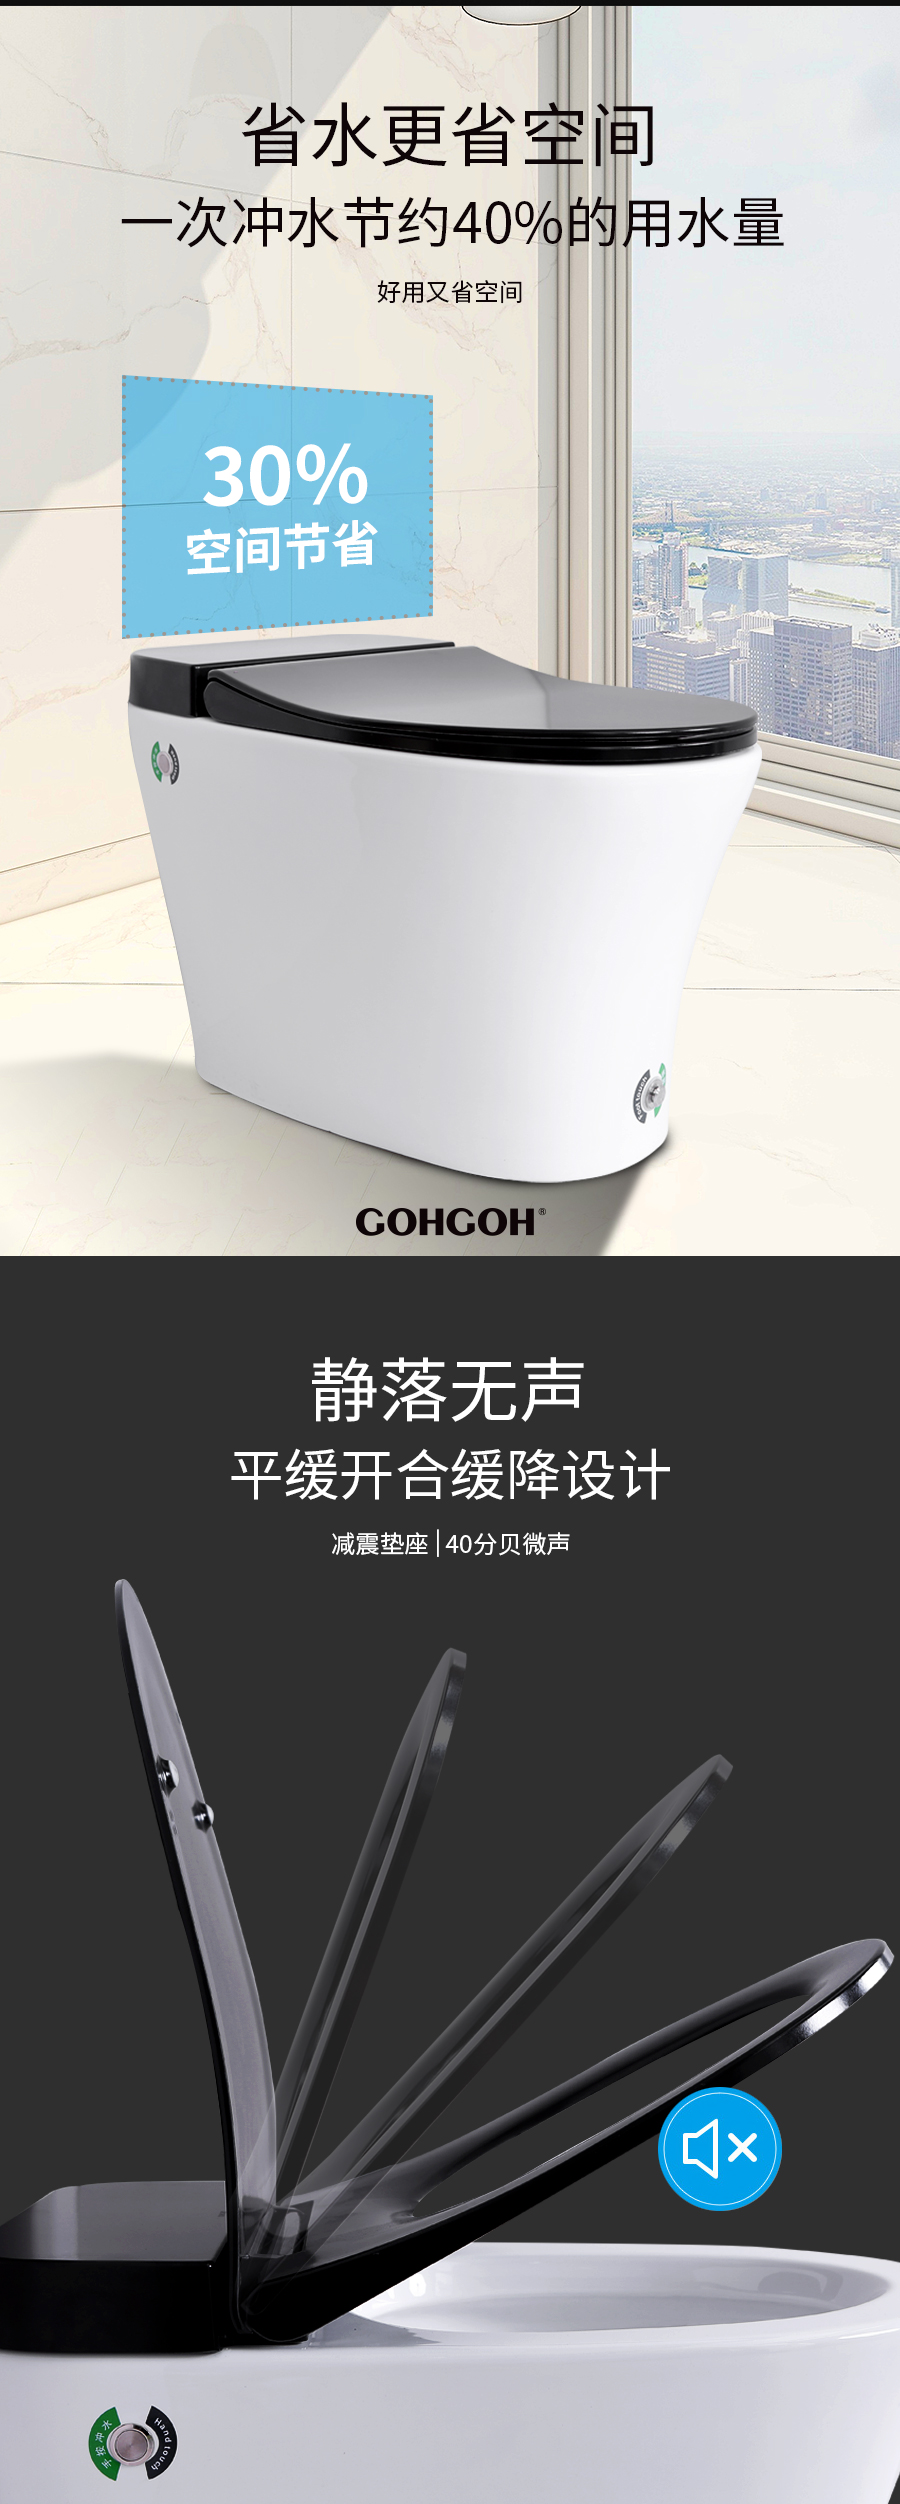 GOHGOH 家用卫生间陶瓷坐便器 即热式脉冲马桶 一体式座便节水防臭马桶2001